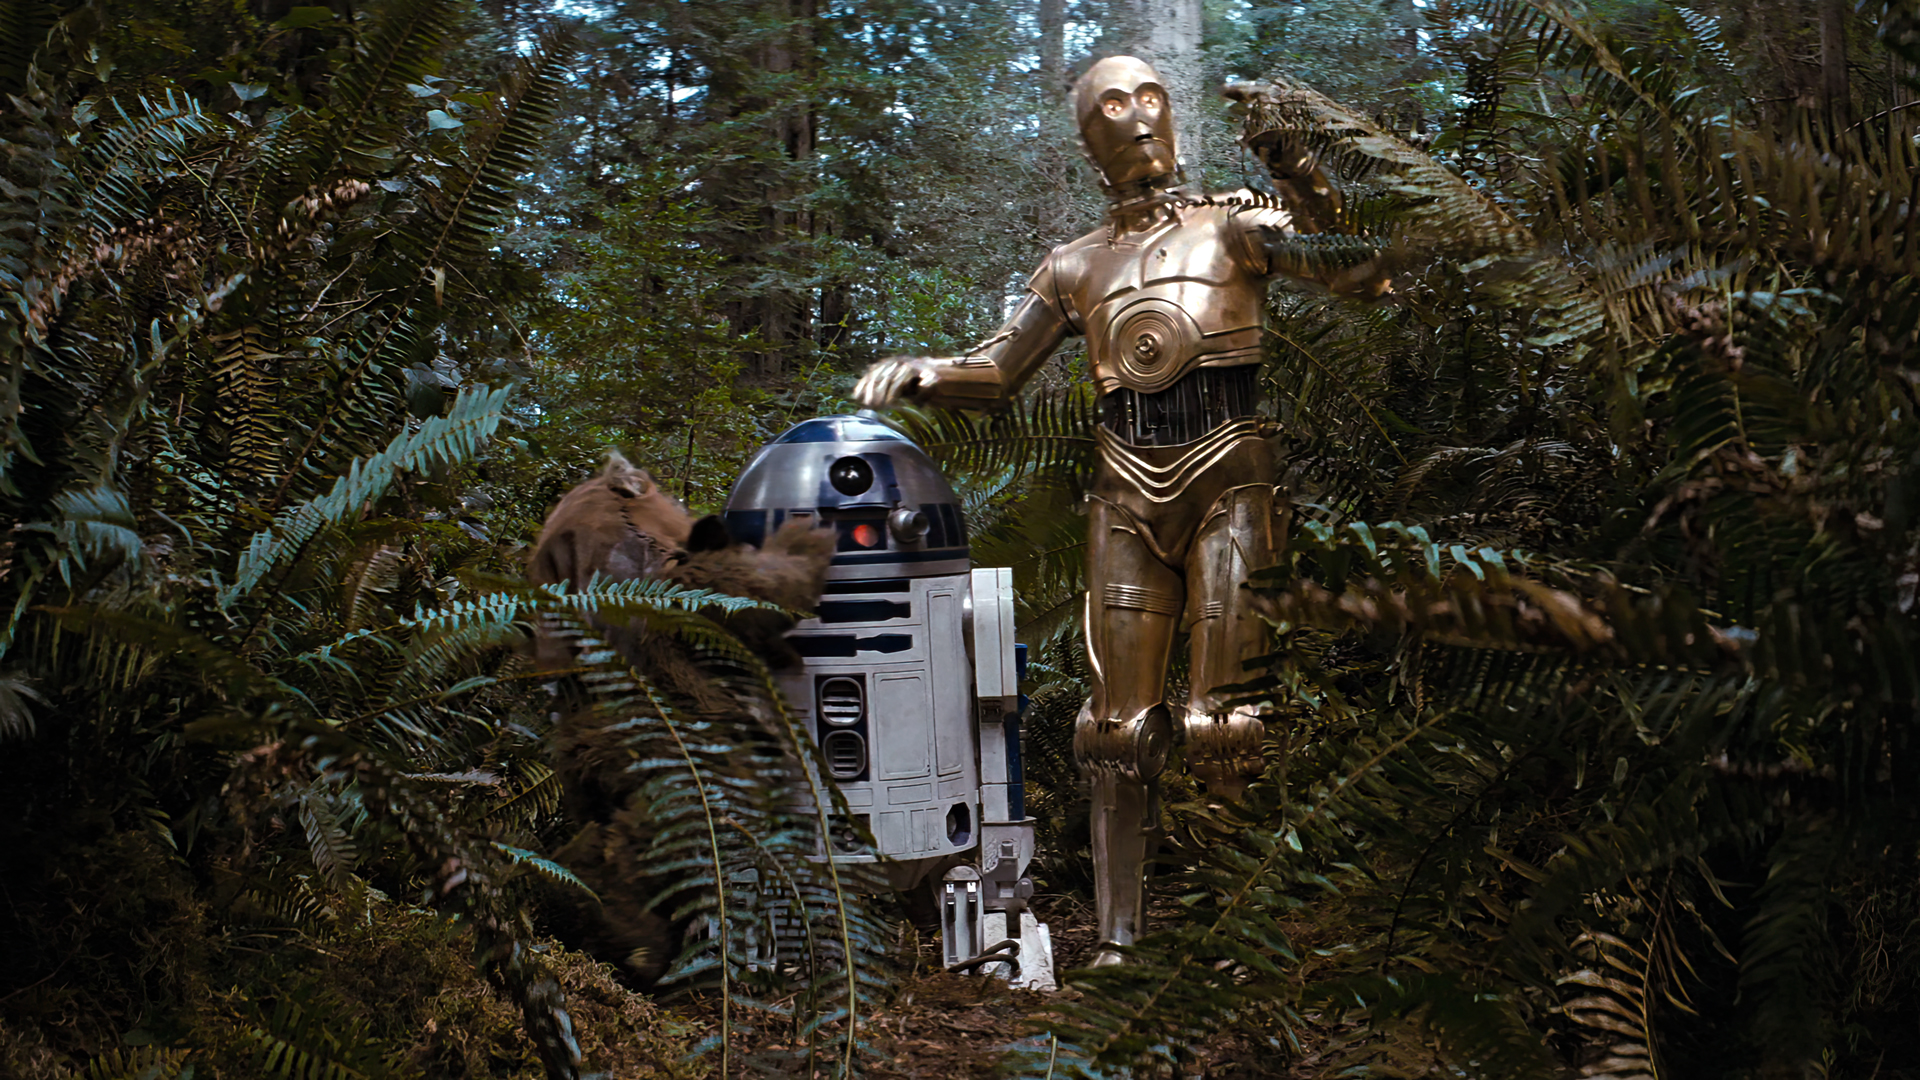 General 1920x1080 Star Wars: Episode VI - The Return of the Jedi movies film stills Star Wars C-3PO R2-D2 robot Ewok plants leaves Endor